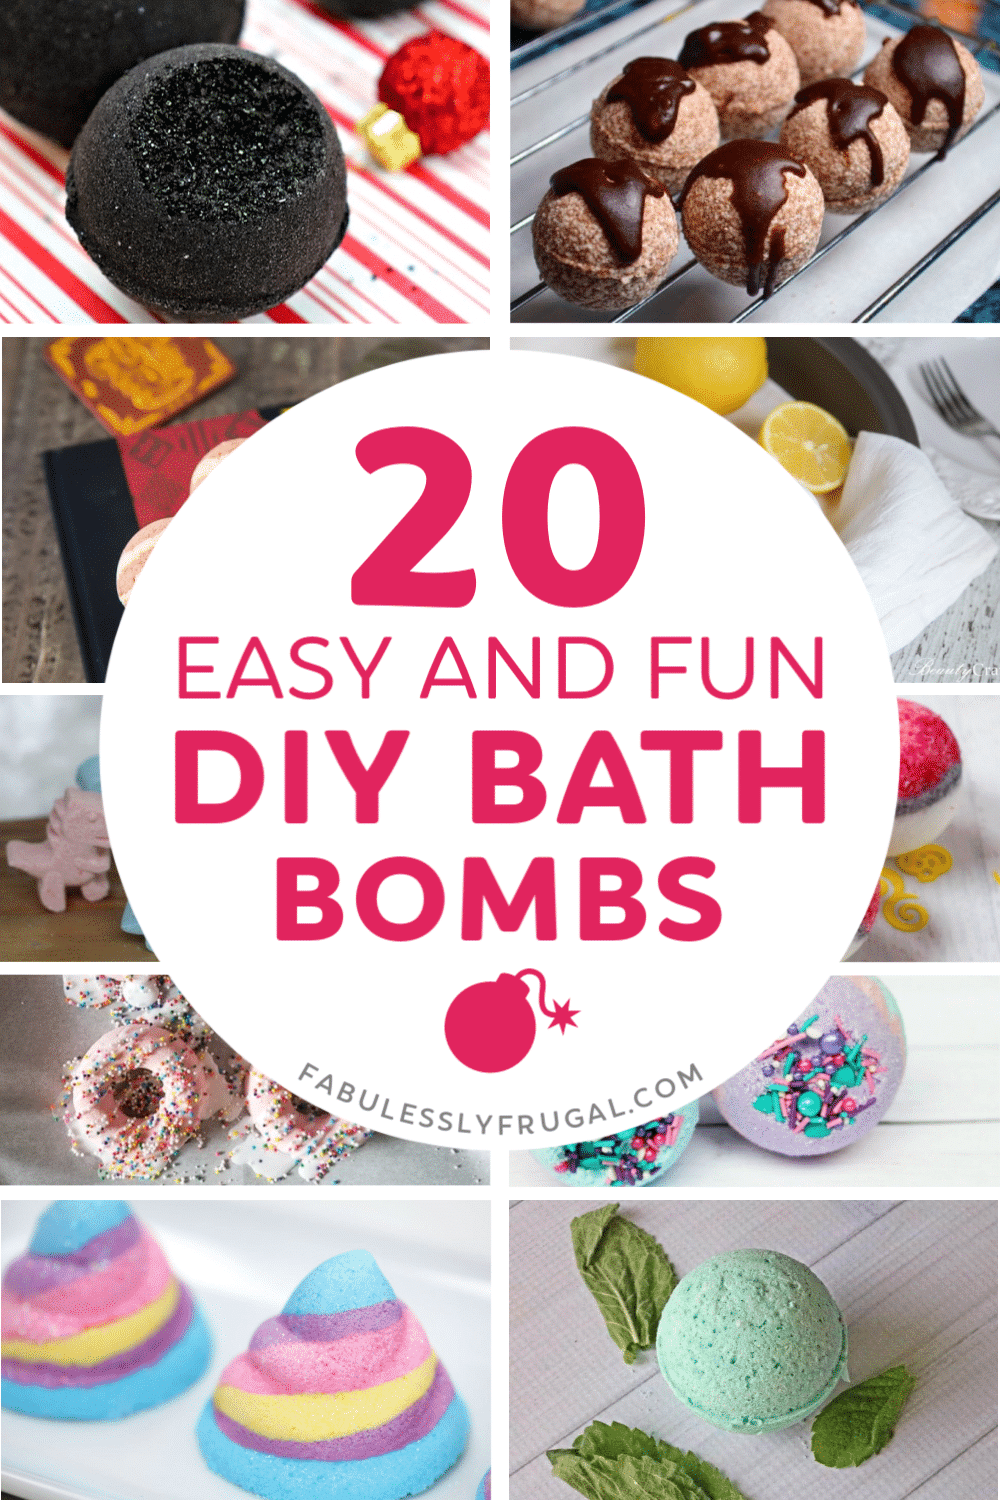 Easy DIY bath bombs